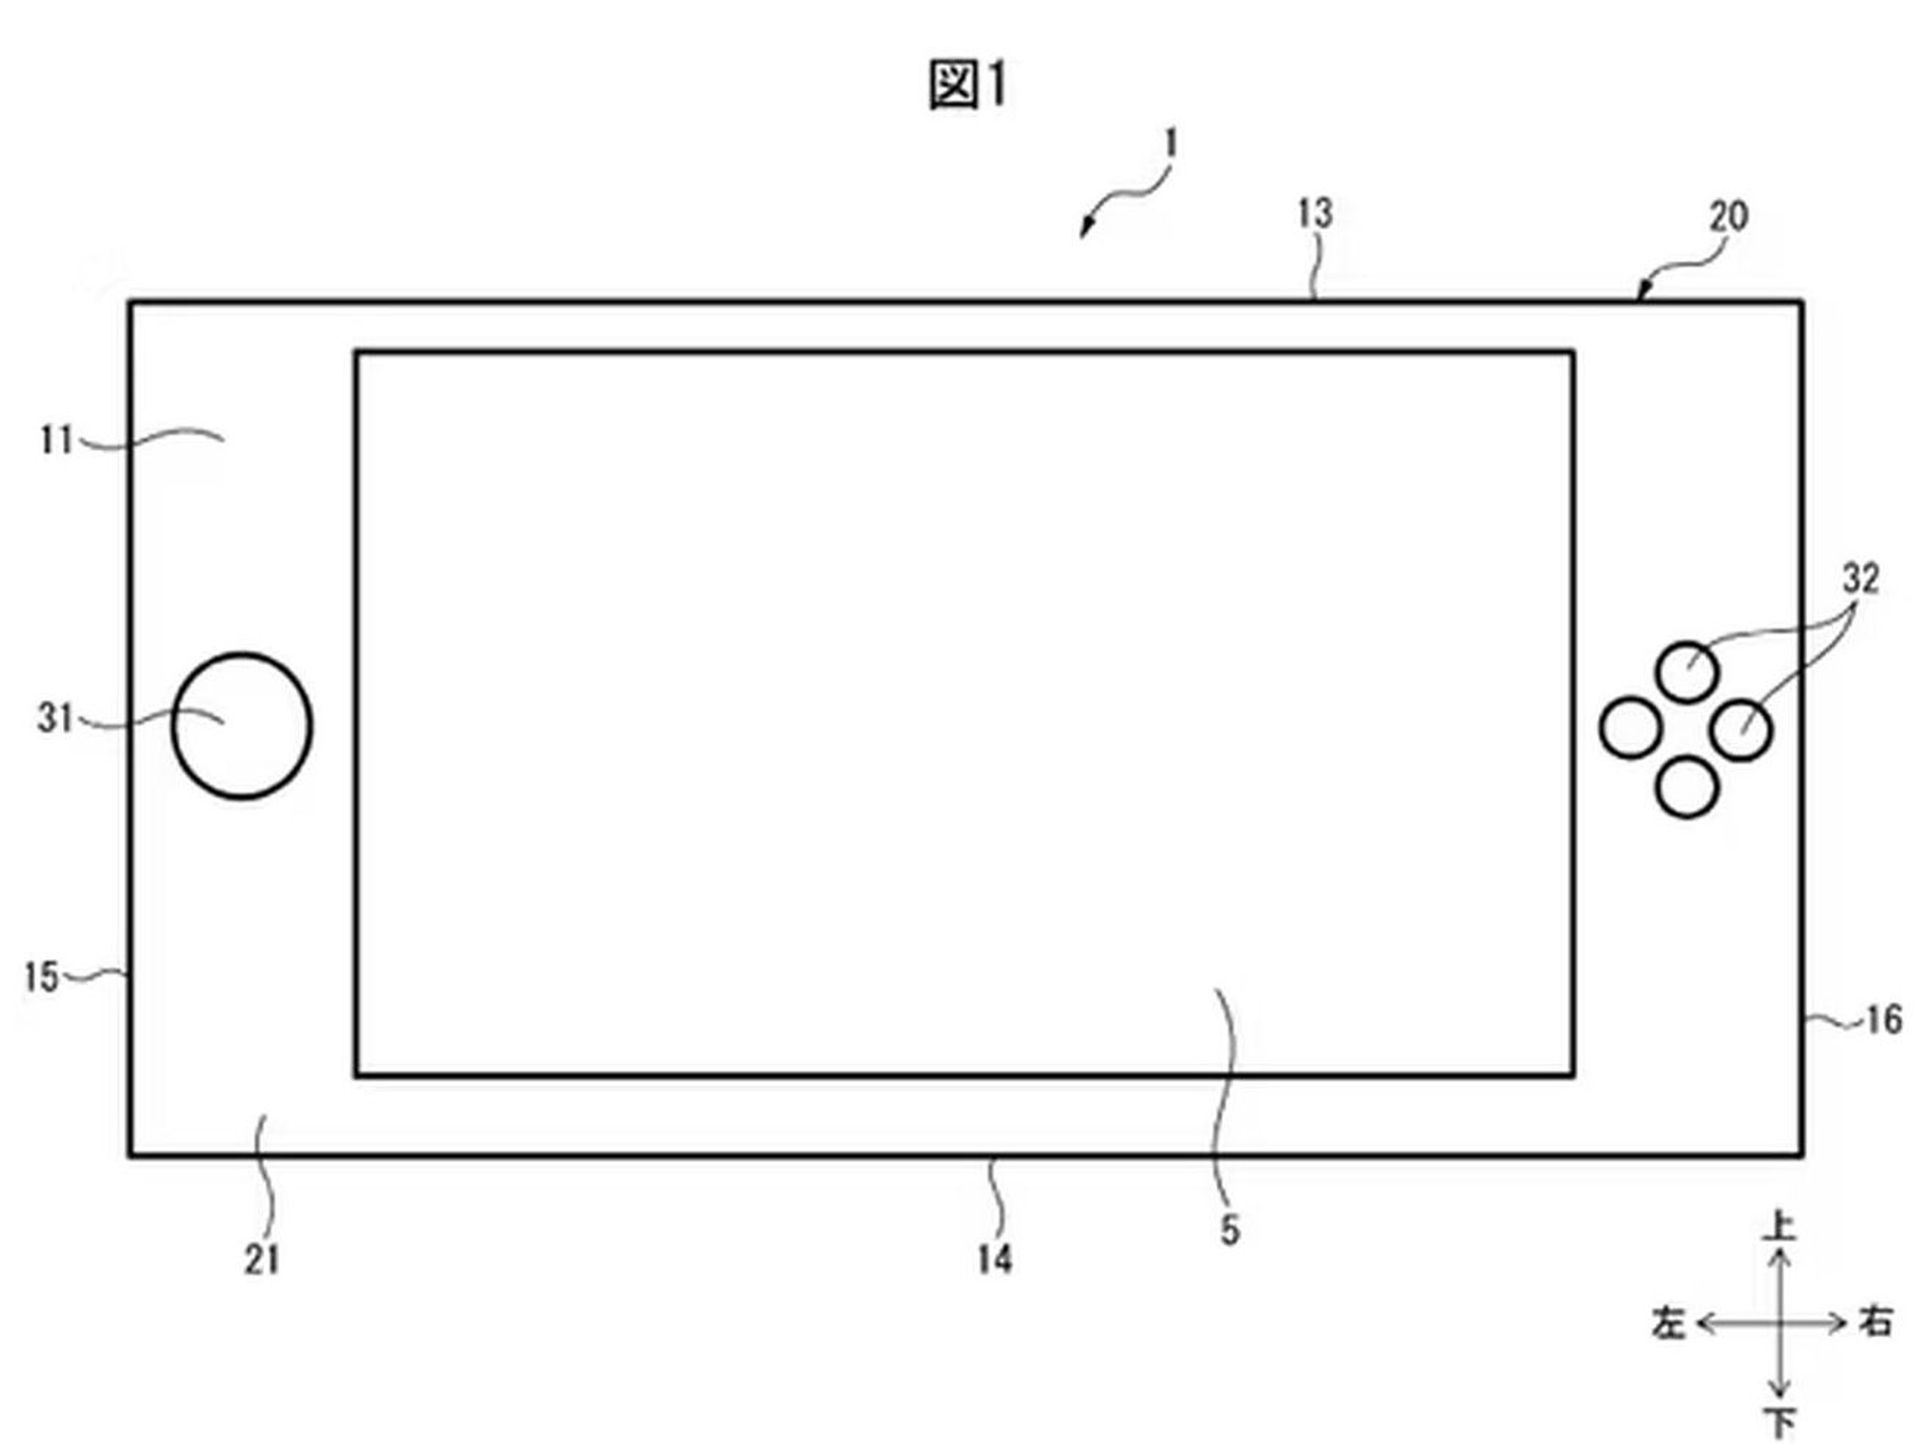 Nintendo Switch 2 patent